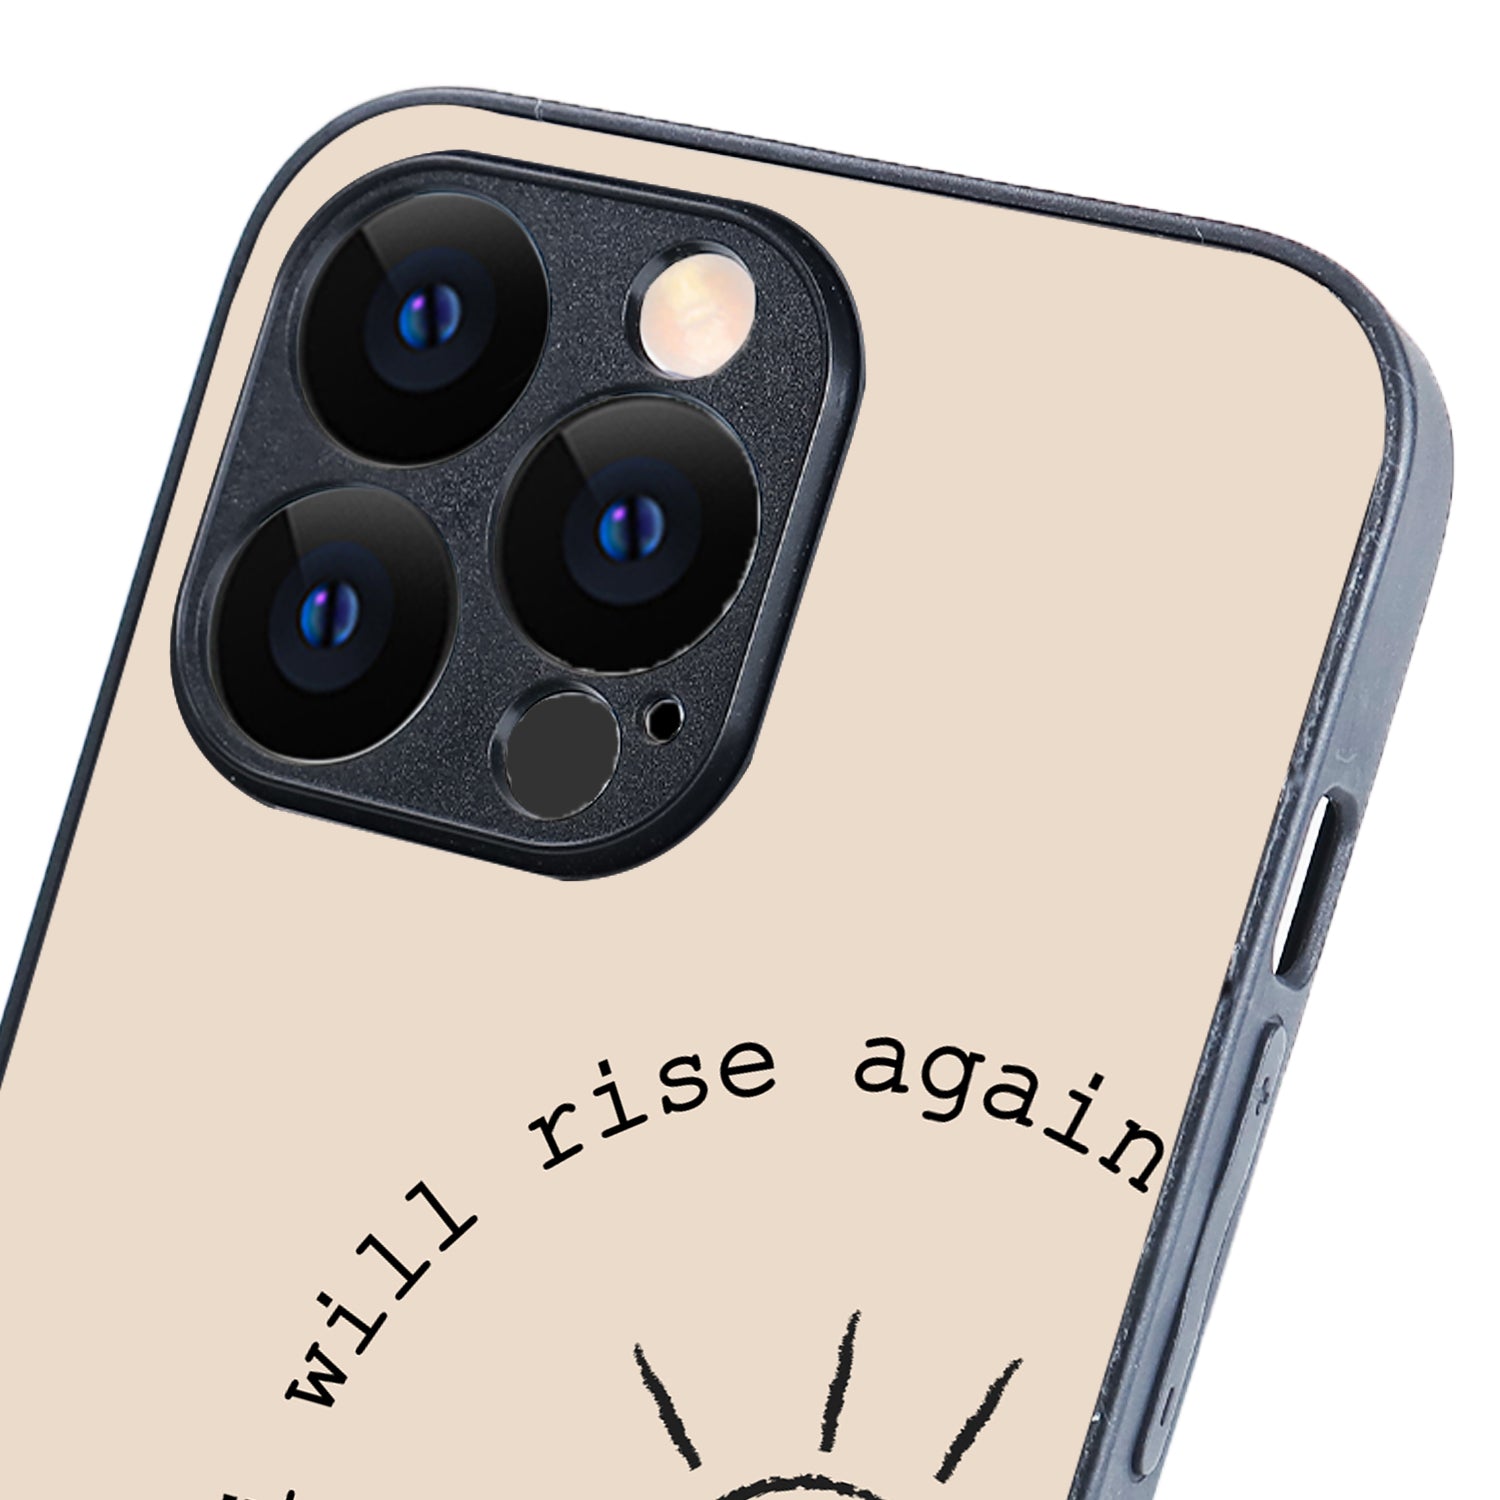 Rise Like Sun Bff iPhone 13 Pro Case